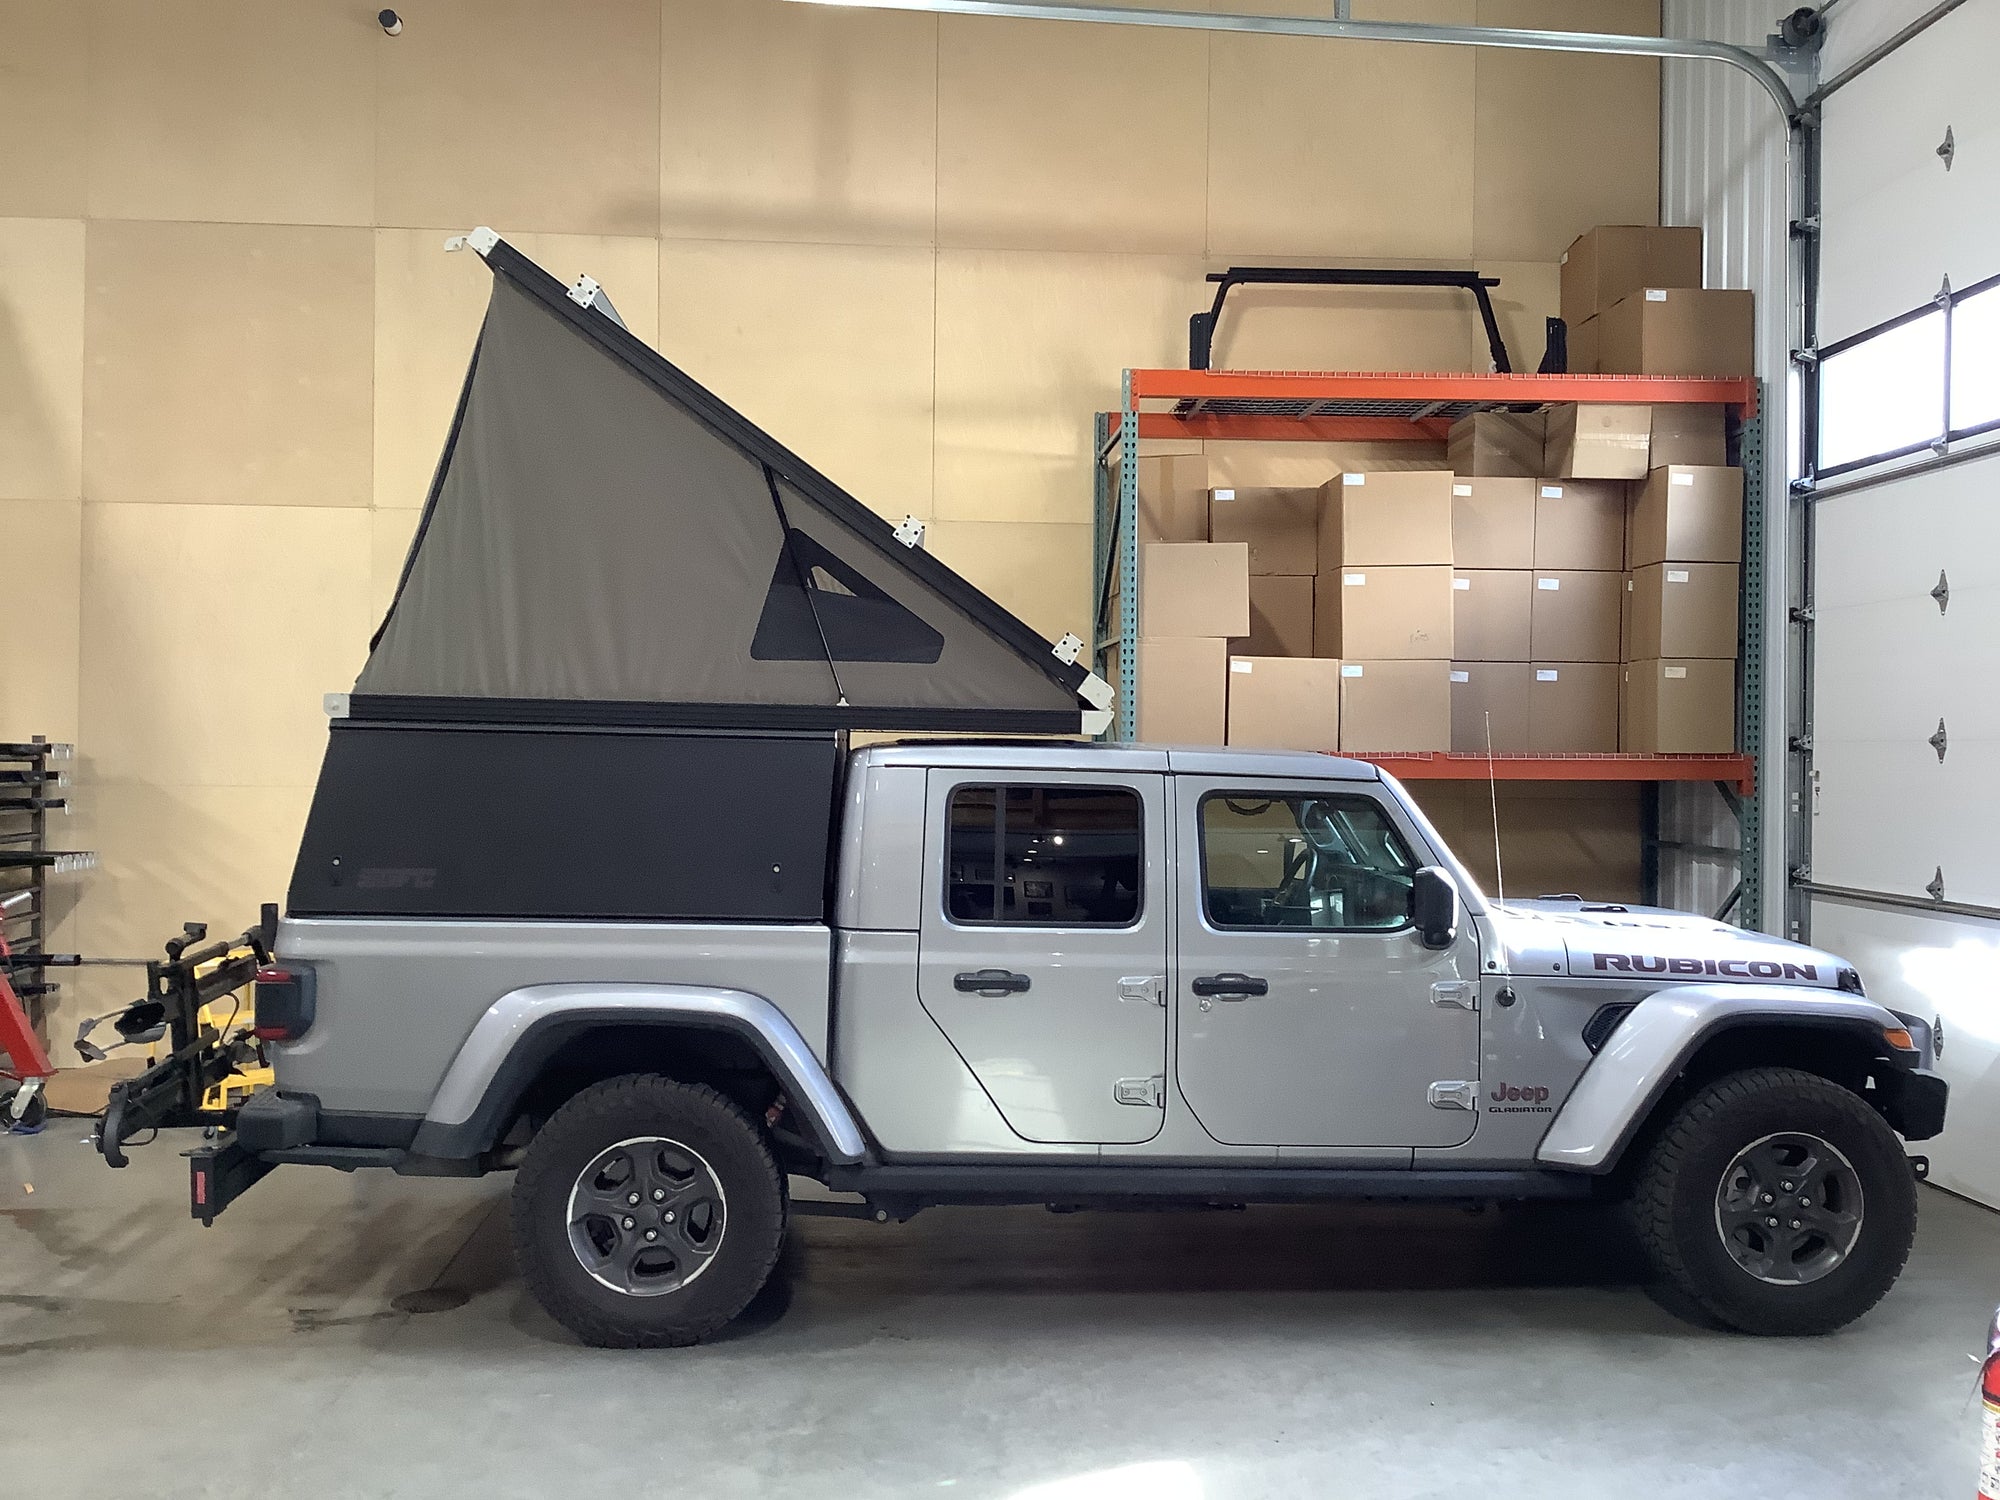 2021 Jeep Gladiator Camper - Build #3704